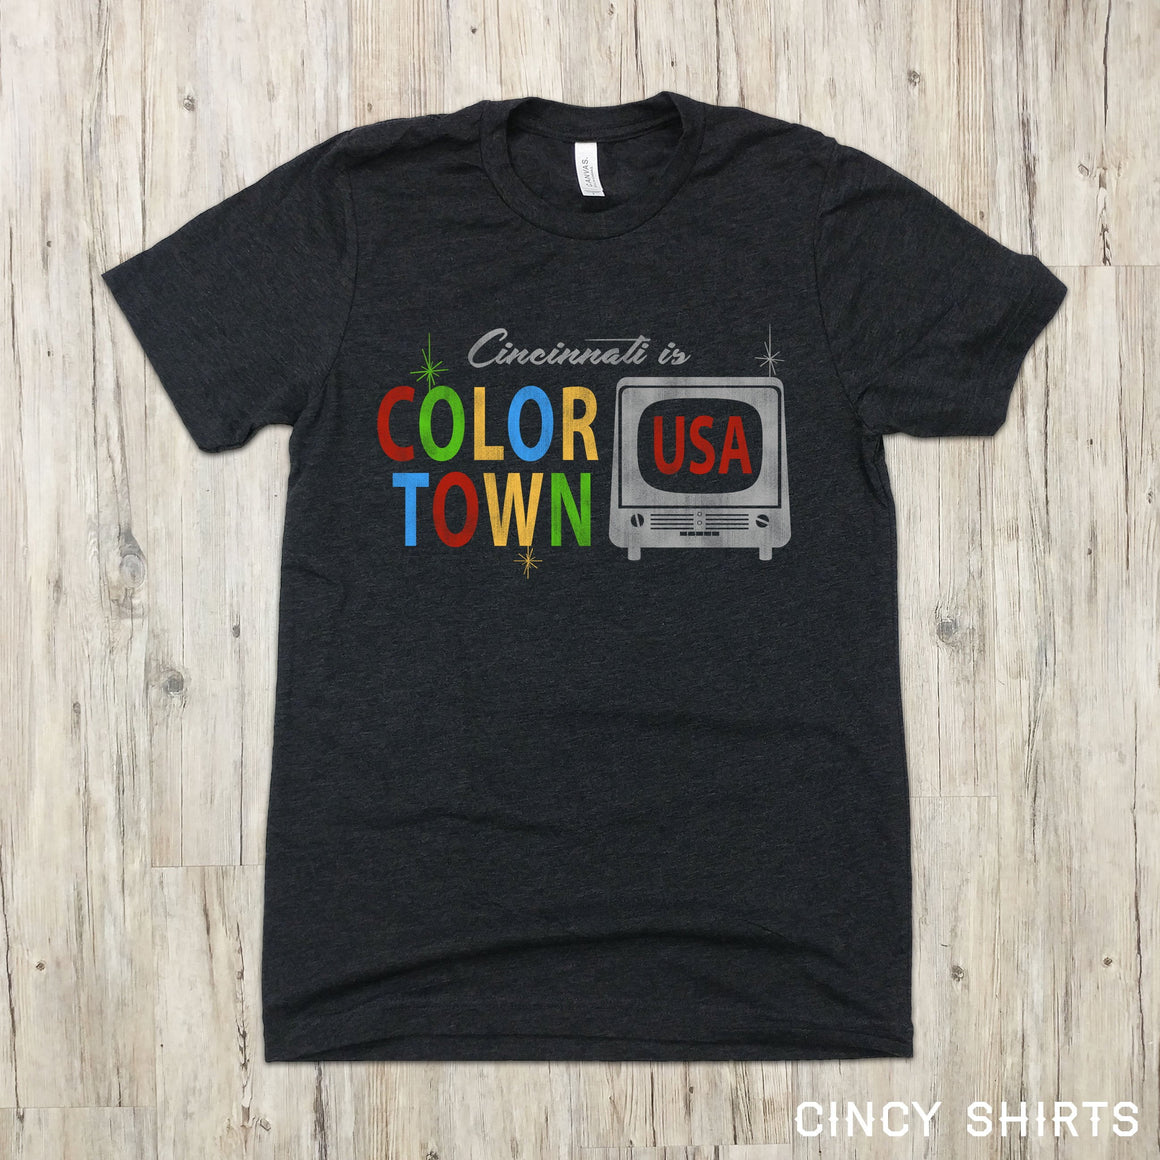 Colortown USA - Cincy Shirts